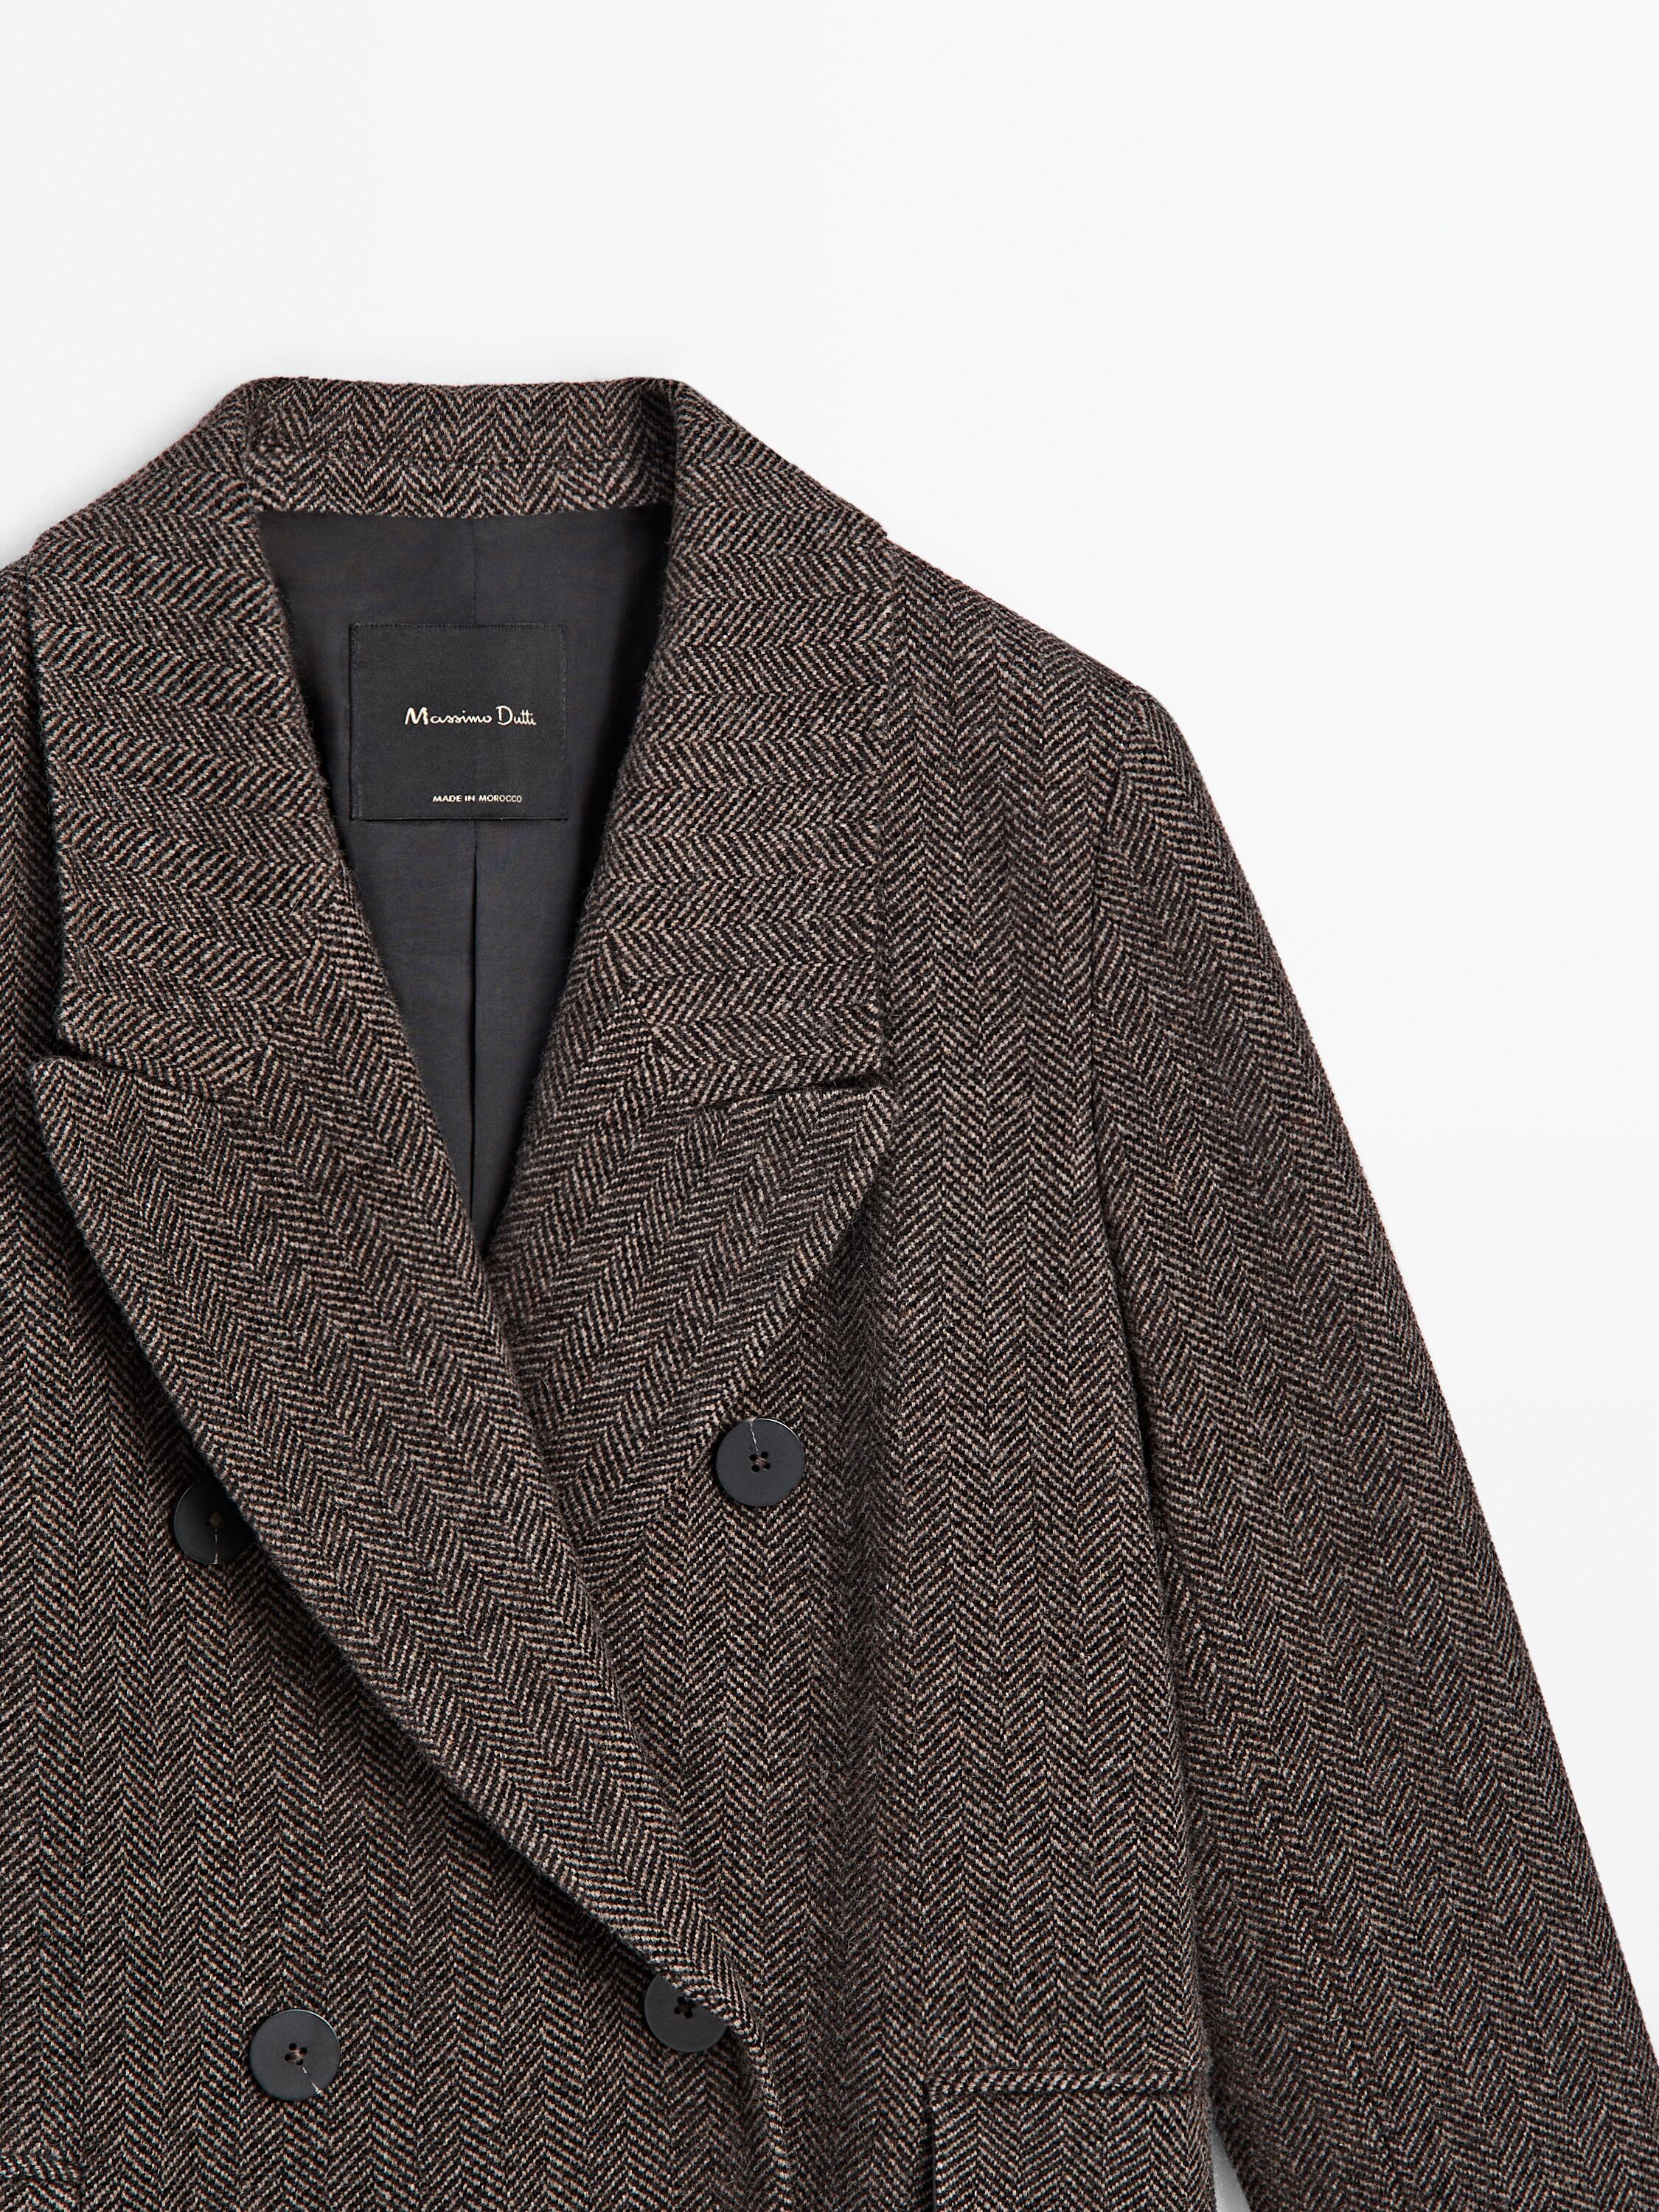 Long double-breasted wool blend herringbone coat